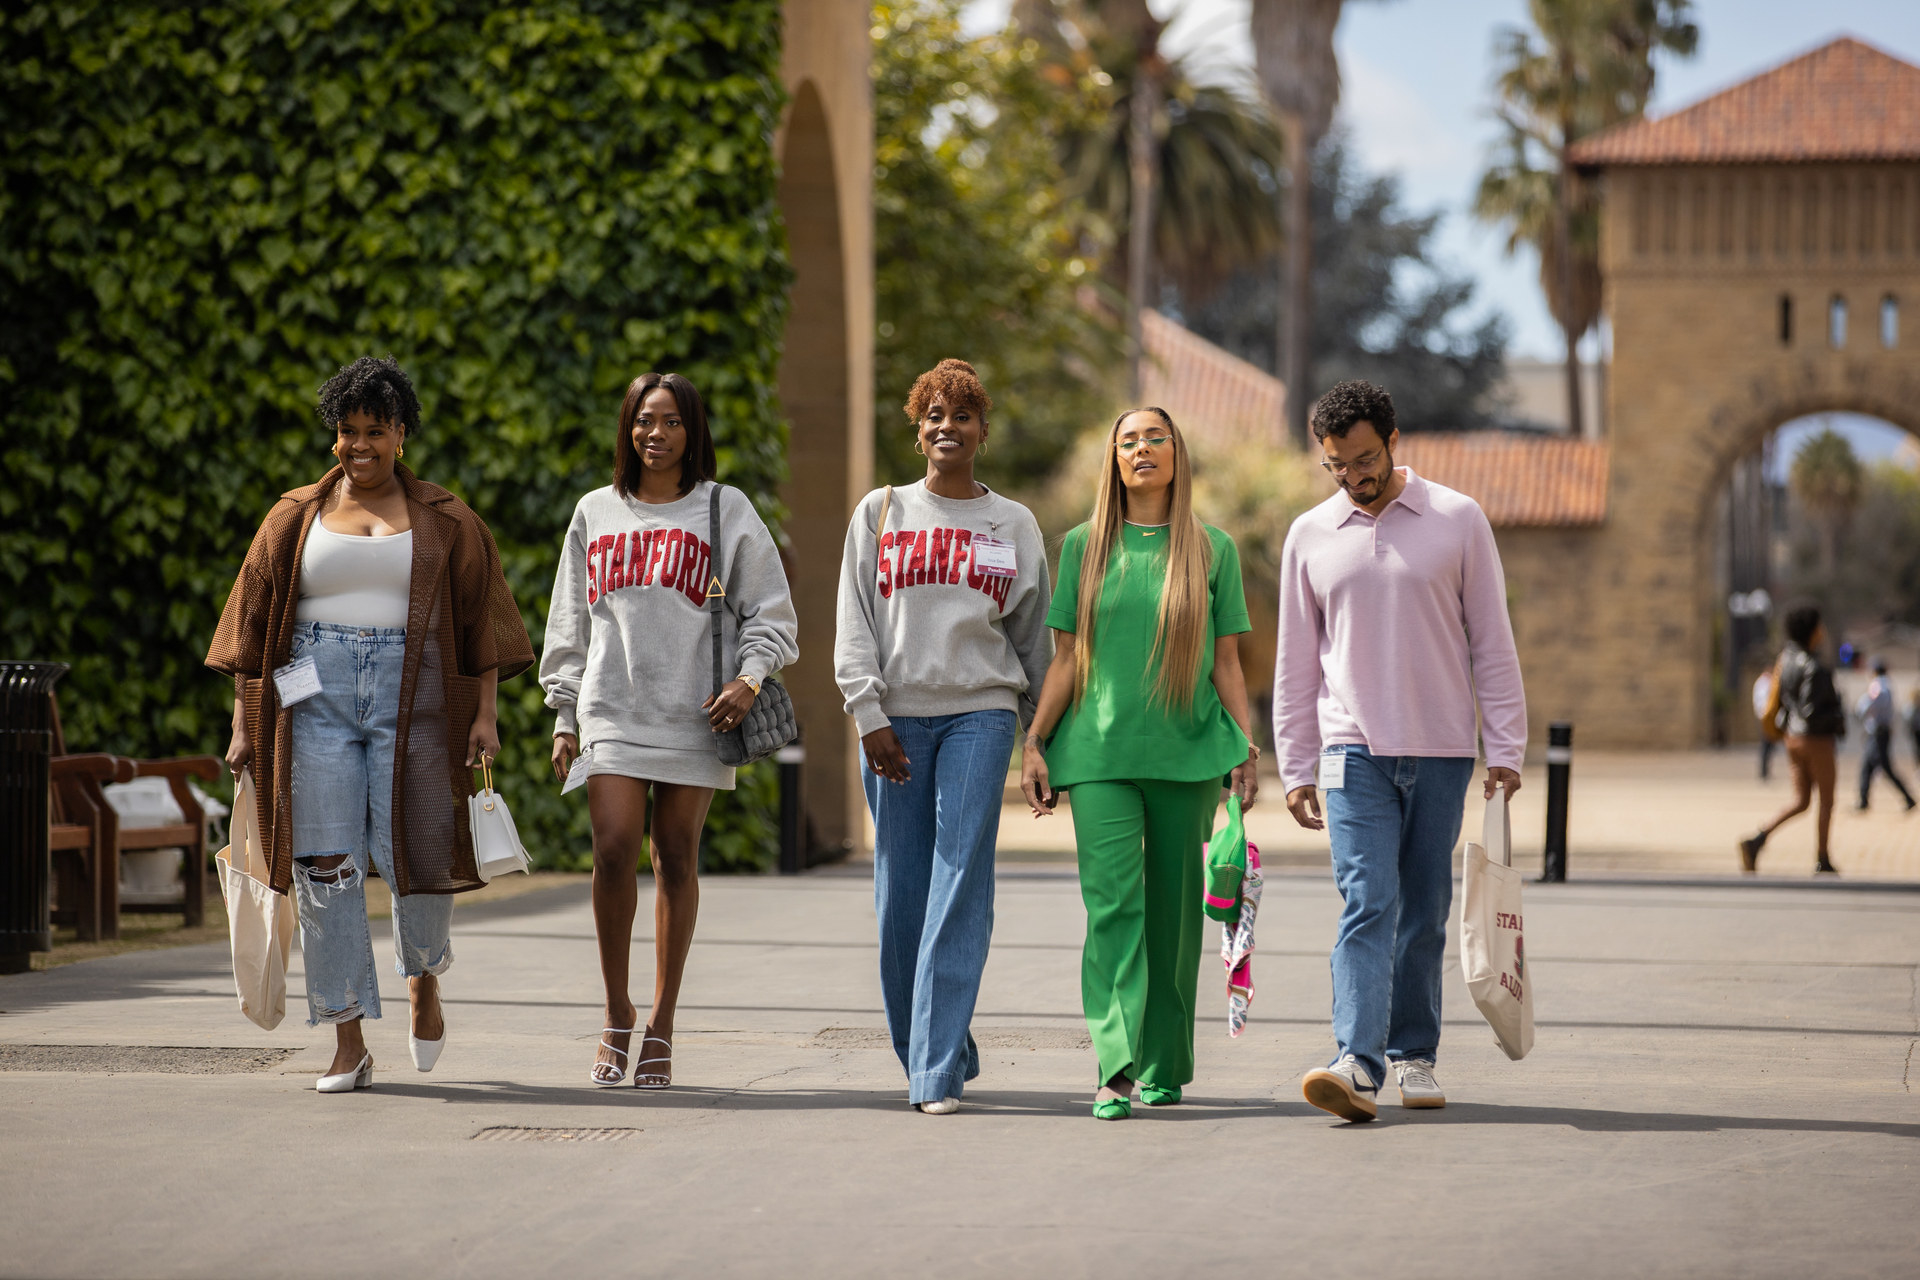 Kelly, Molly, Issa, Tiffany, and Derek walking together on a school campus